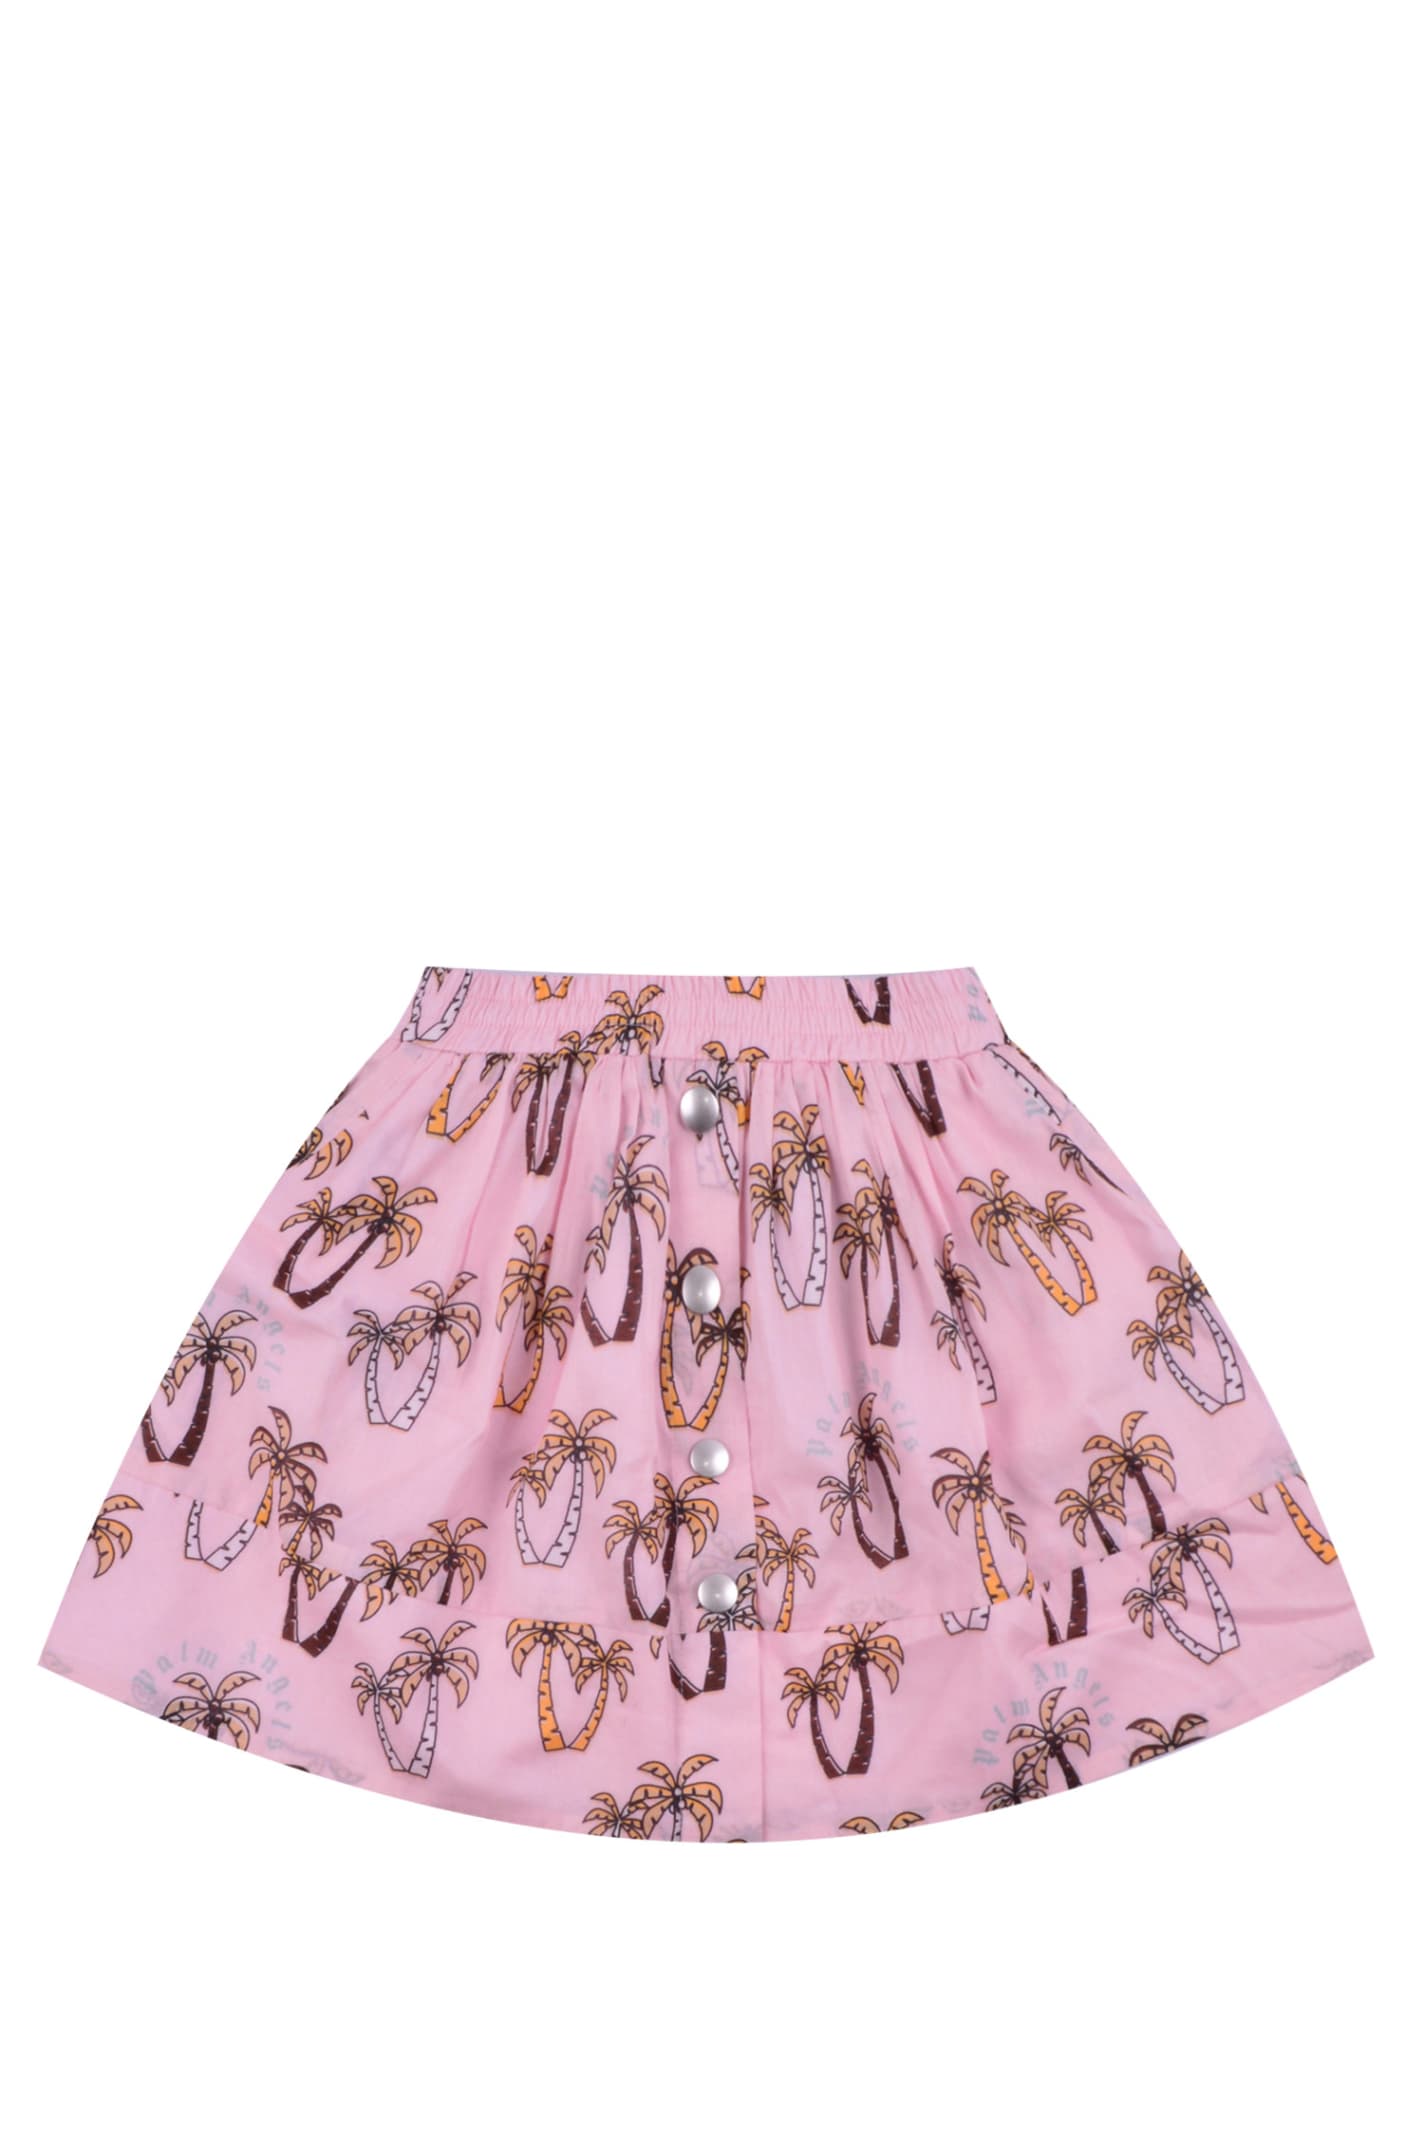 Palm Angels Cotton Skirt